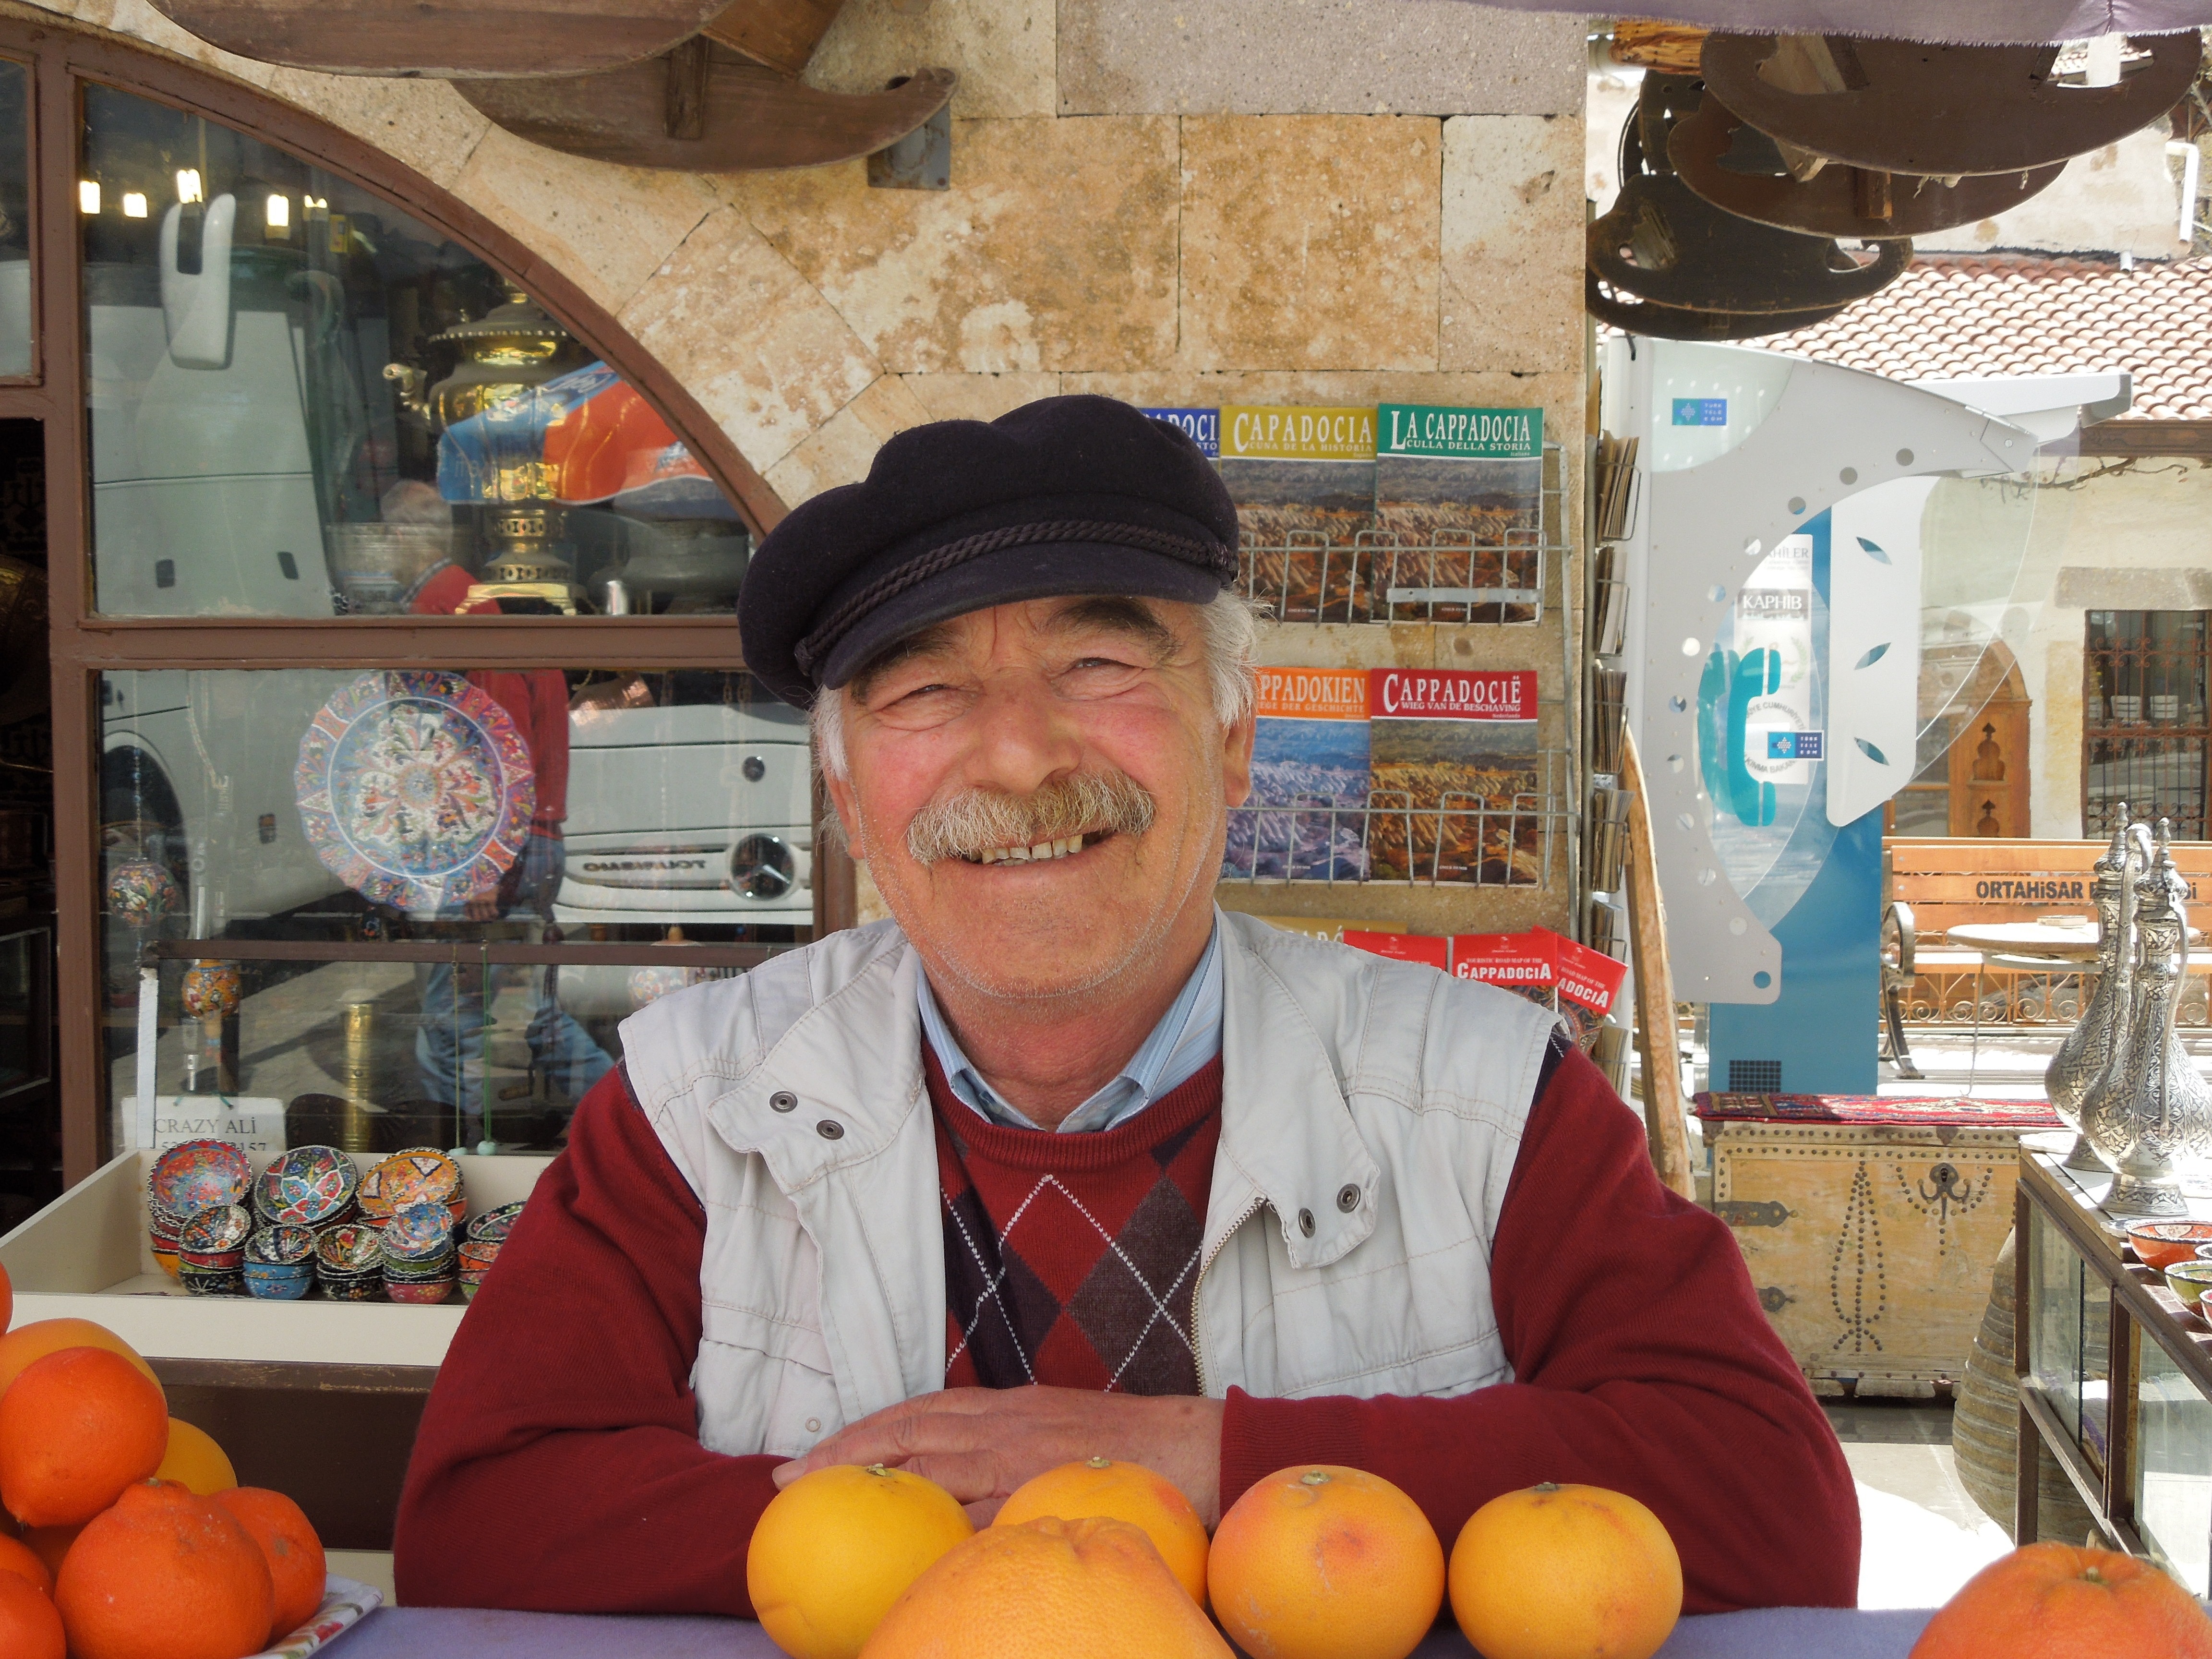 Market, Oranges, Seller, Turkey, Stall, food and drink, mature adult